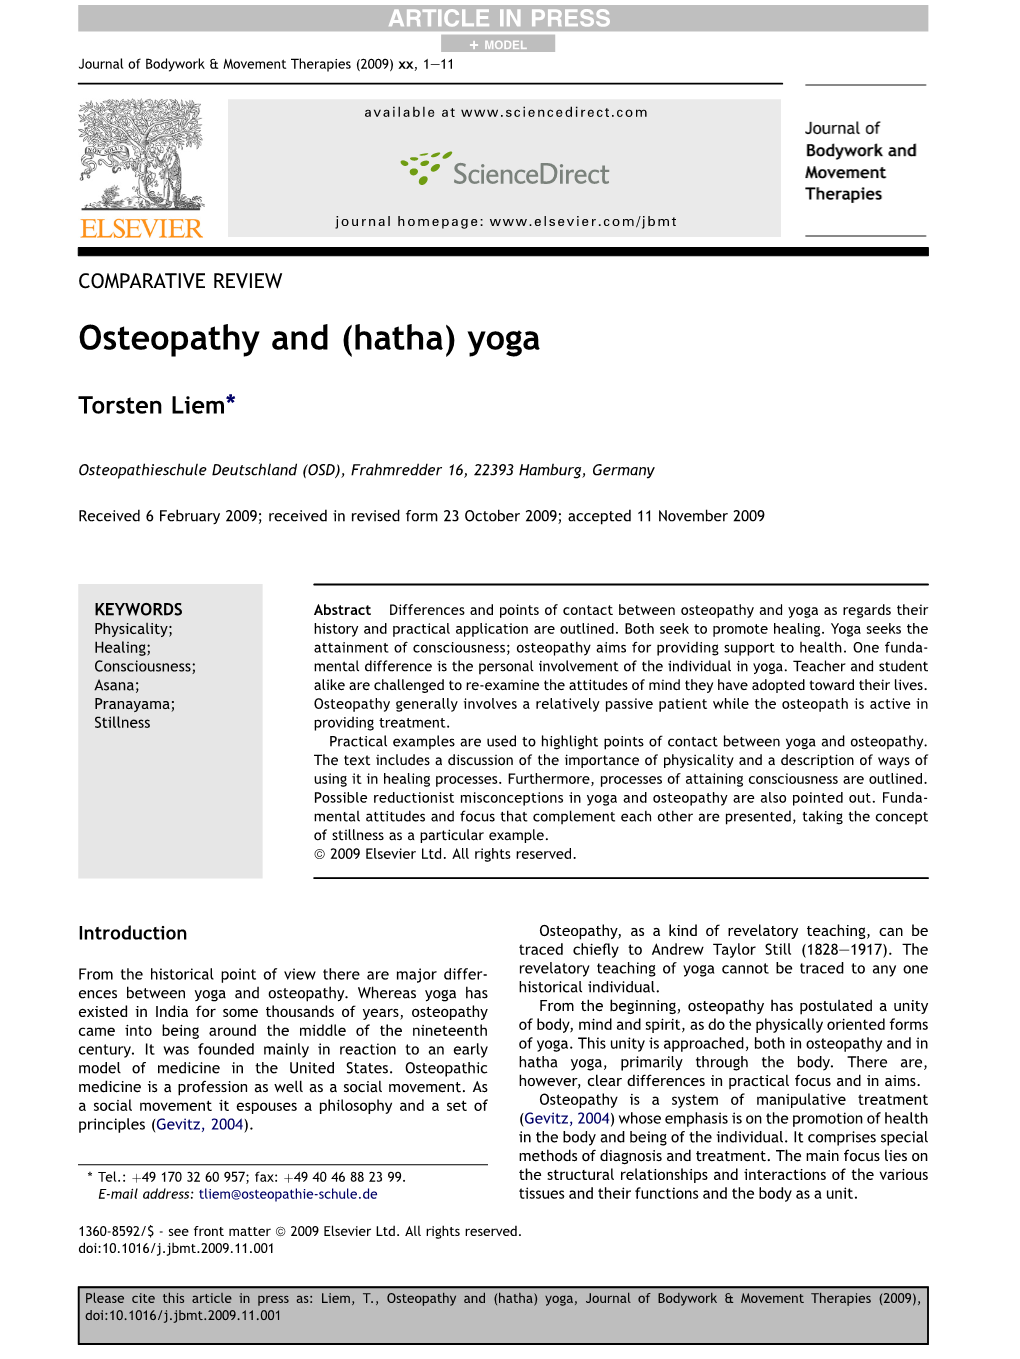 Osteopathy and (Hatha) Yoga